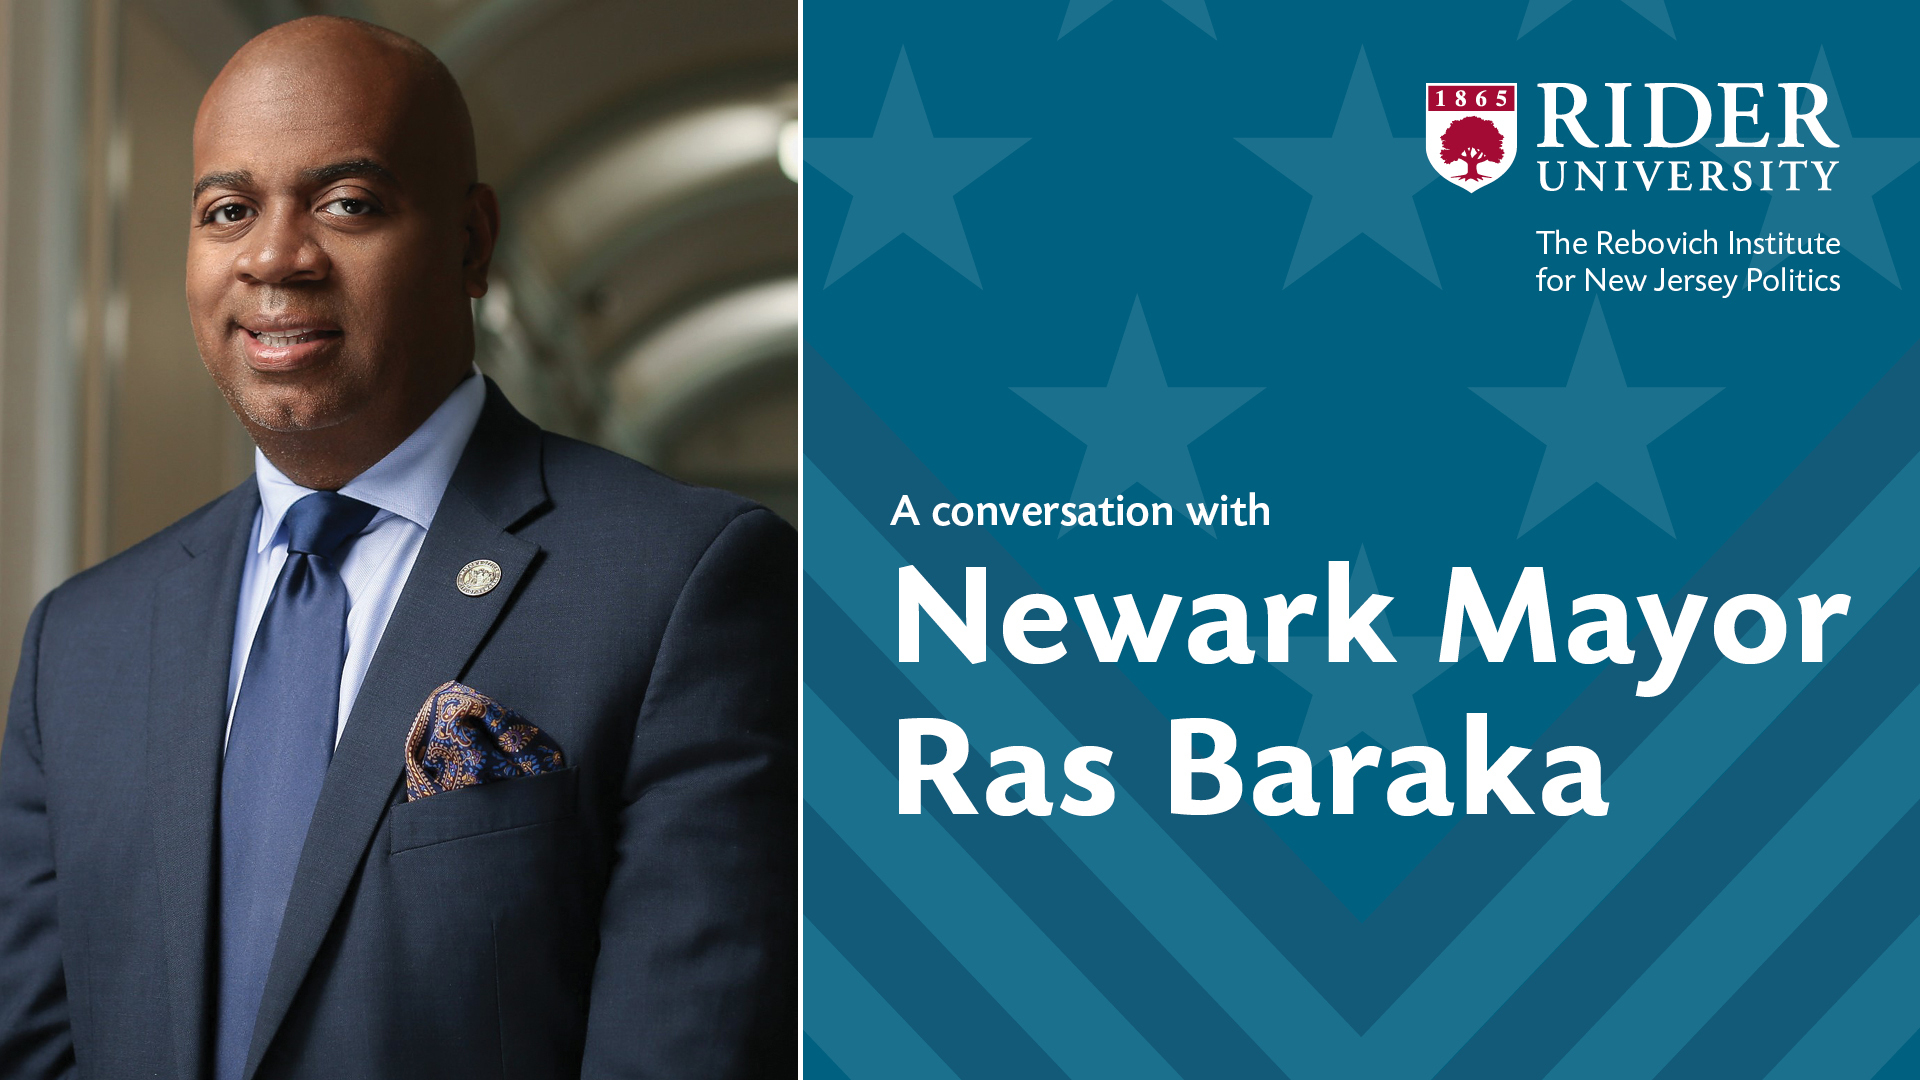 A conversation with Newark Mayor Ras Baraka